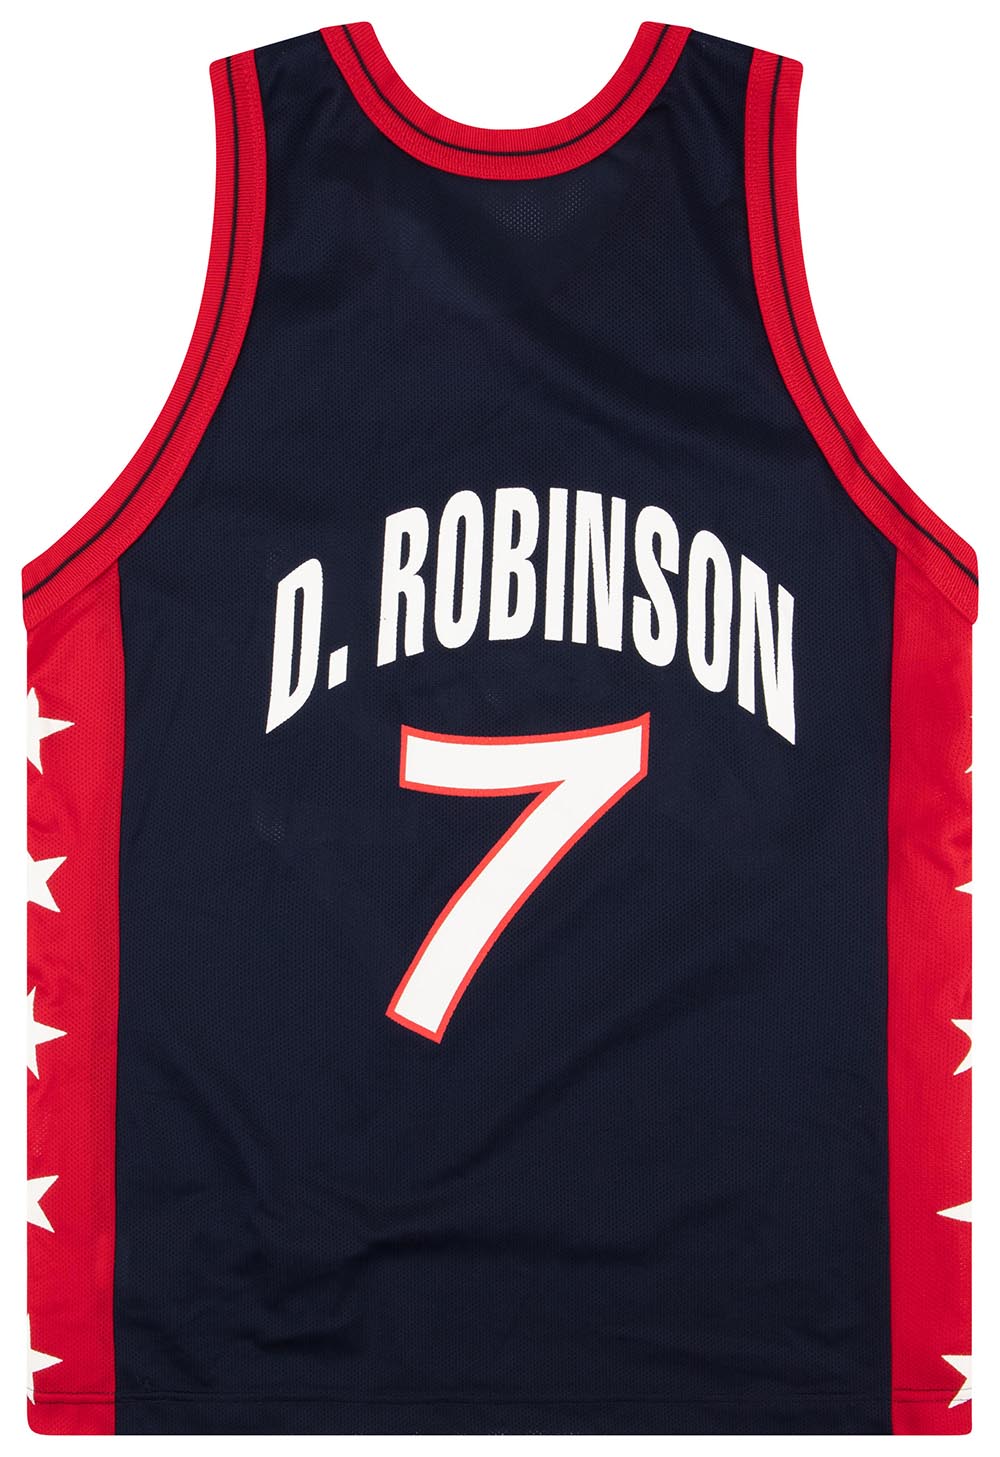 1996-99 USA D. ROBINSON #7 CHAMPION JERSEY (AWAY) M